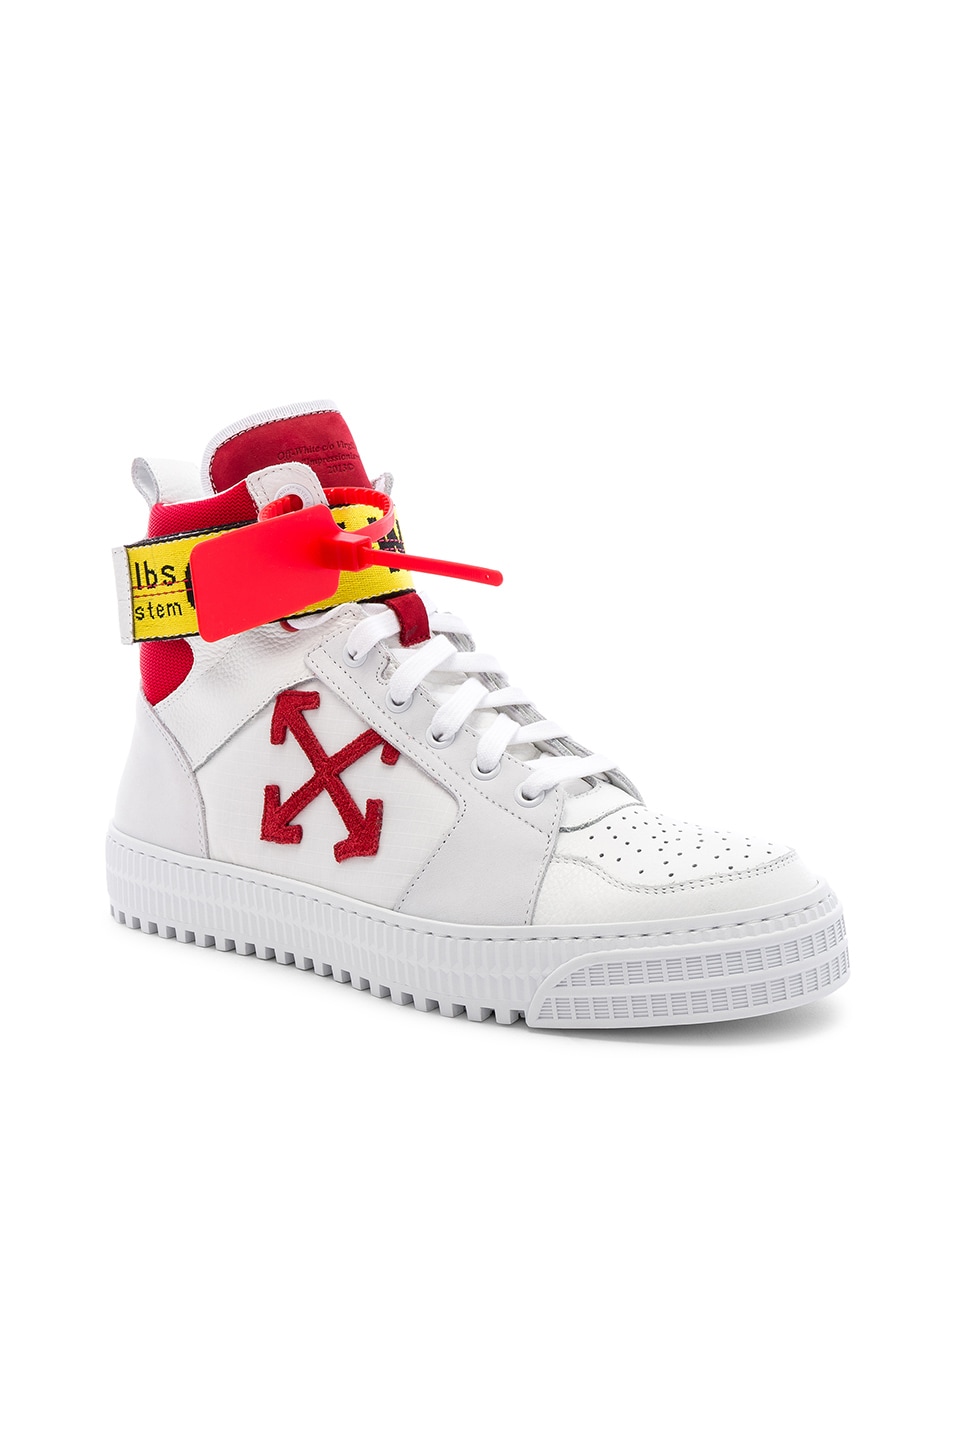 OFF-WHITE Industrial Belt Hi-Top Sneaker in White & Red | FWRD